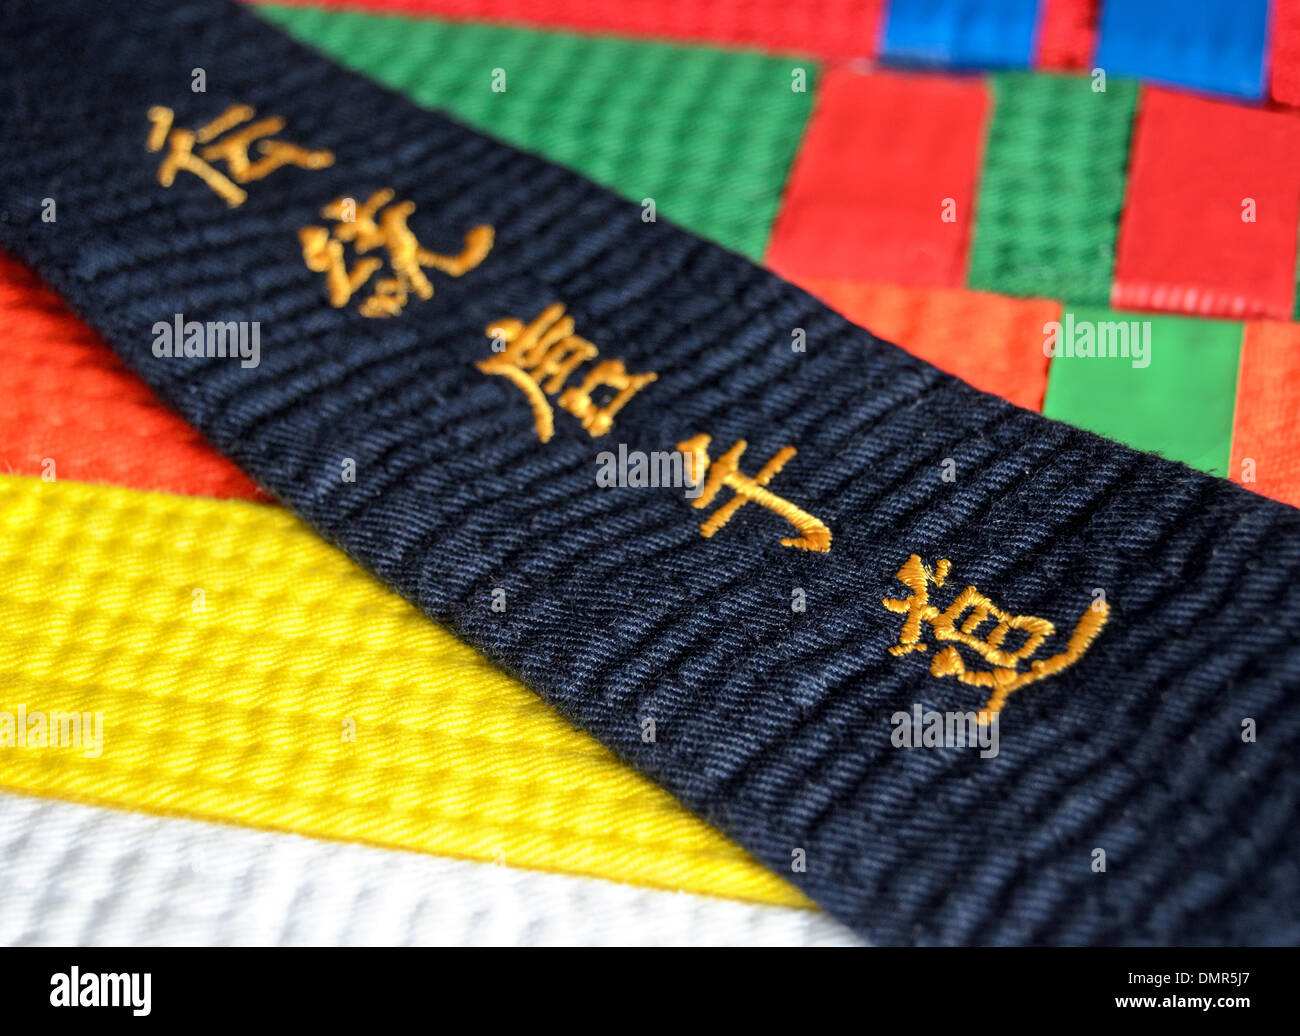 Karate belts immagini e fotografie stock ad alta risoluzione - Alamy